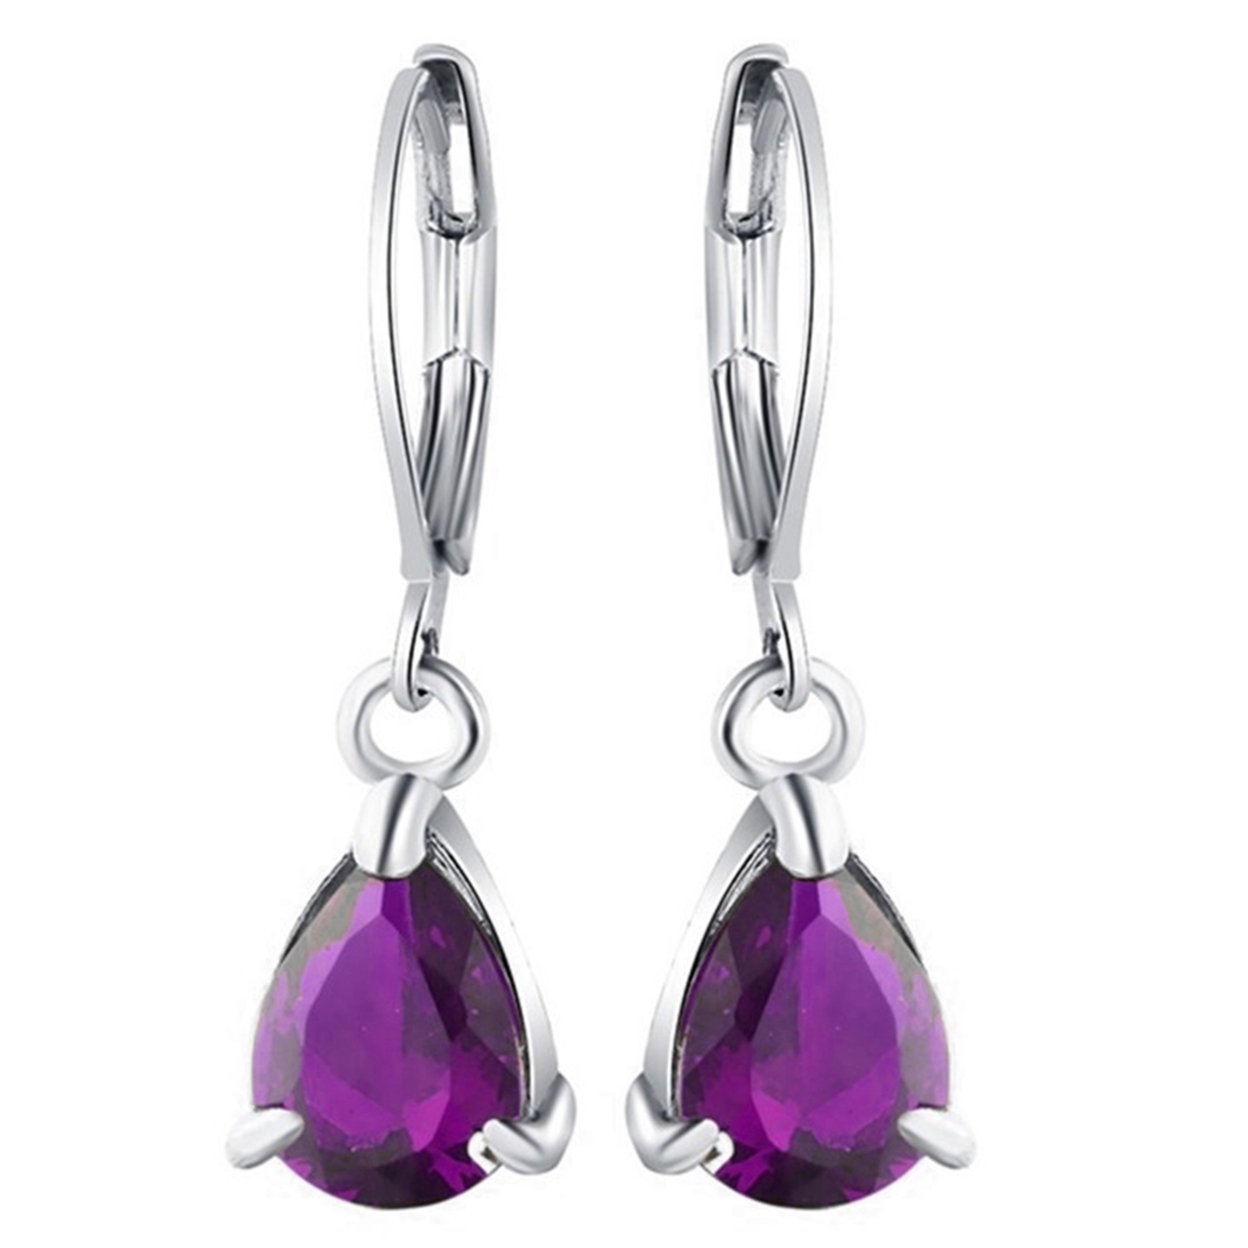 Generic 1 Pair Luxury Romantic Drop Earrings Alloy Faux Crystal Waterdrop Clip Earrings Party Jewelry